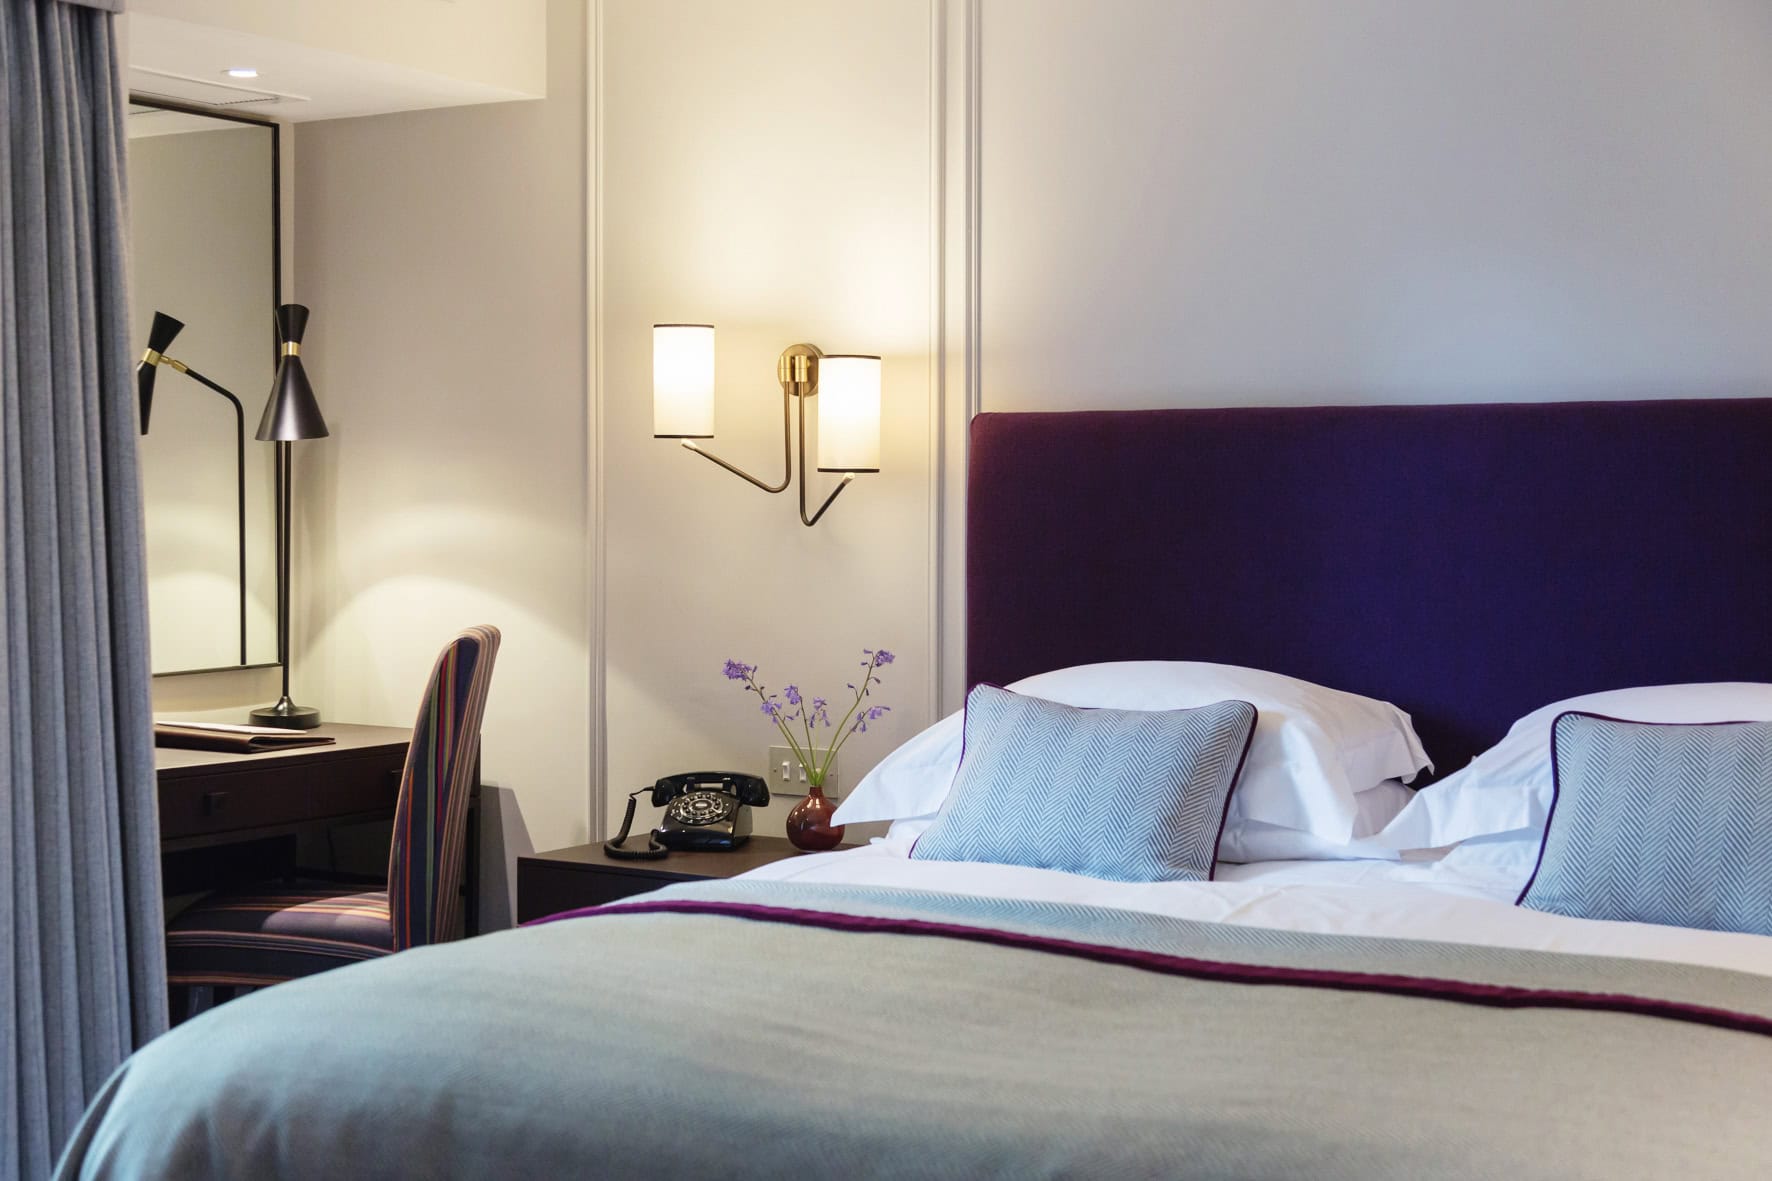 0013 - 2014 - Old Parsonage Hotel - Oxford - High res - Bedroom Flowers Purple - Web Hero